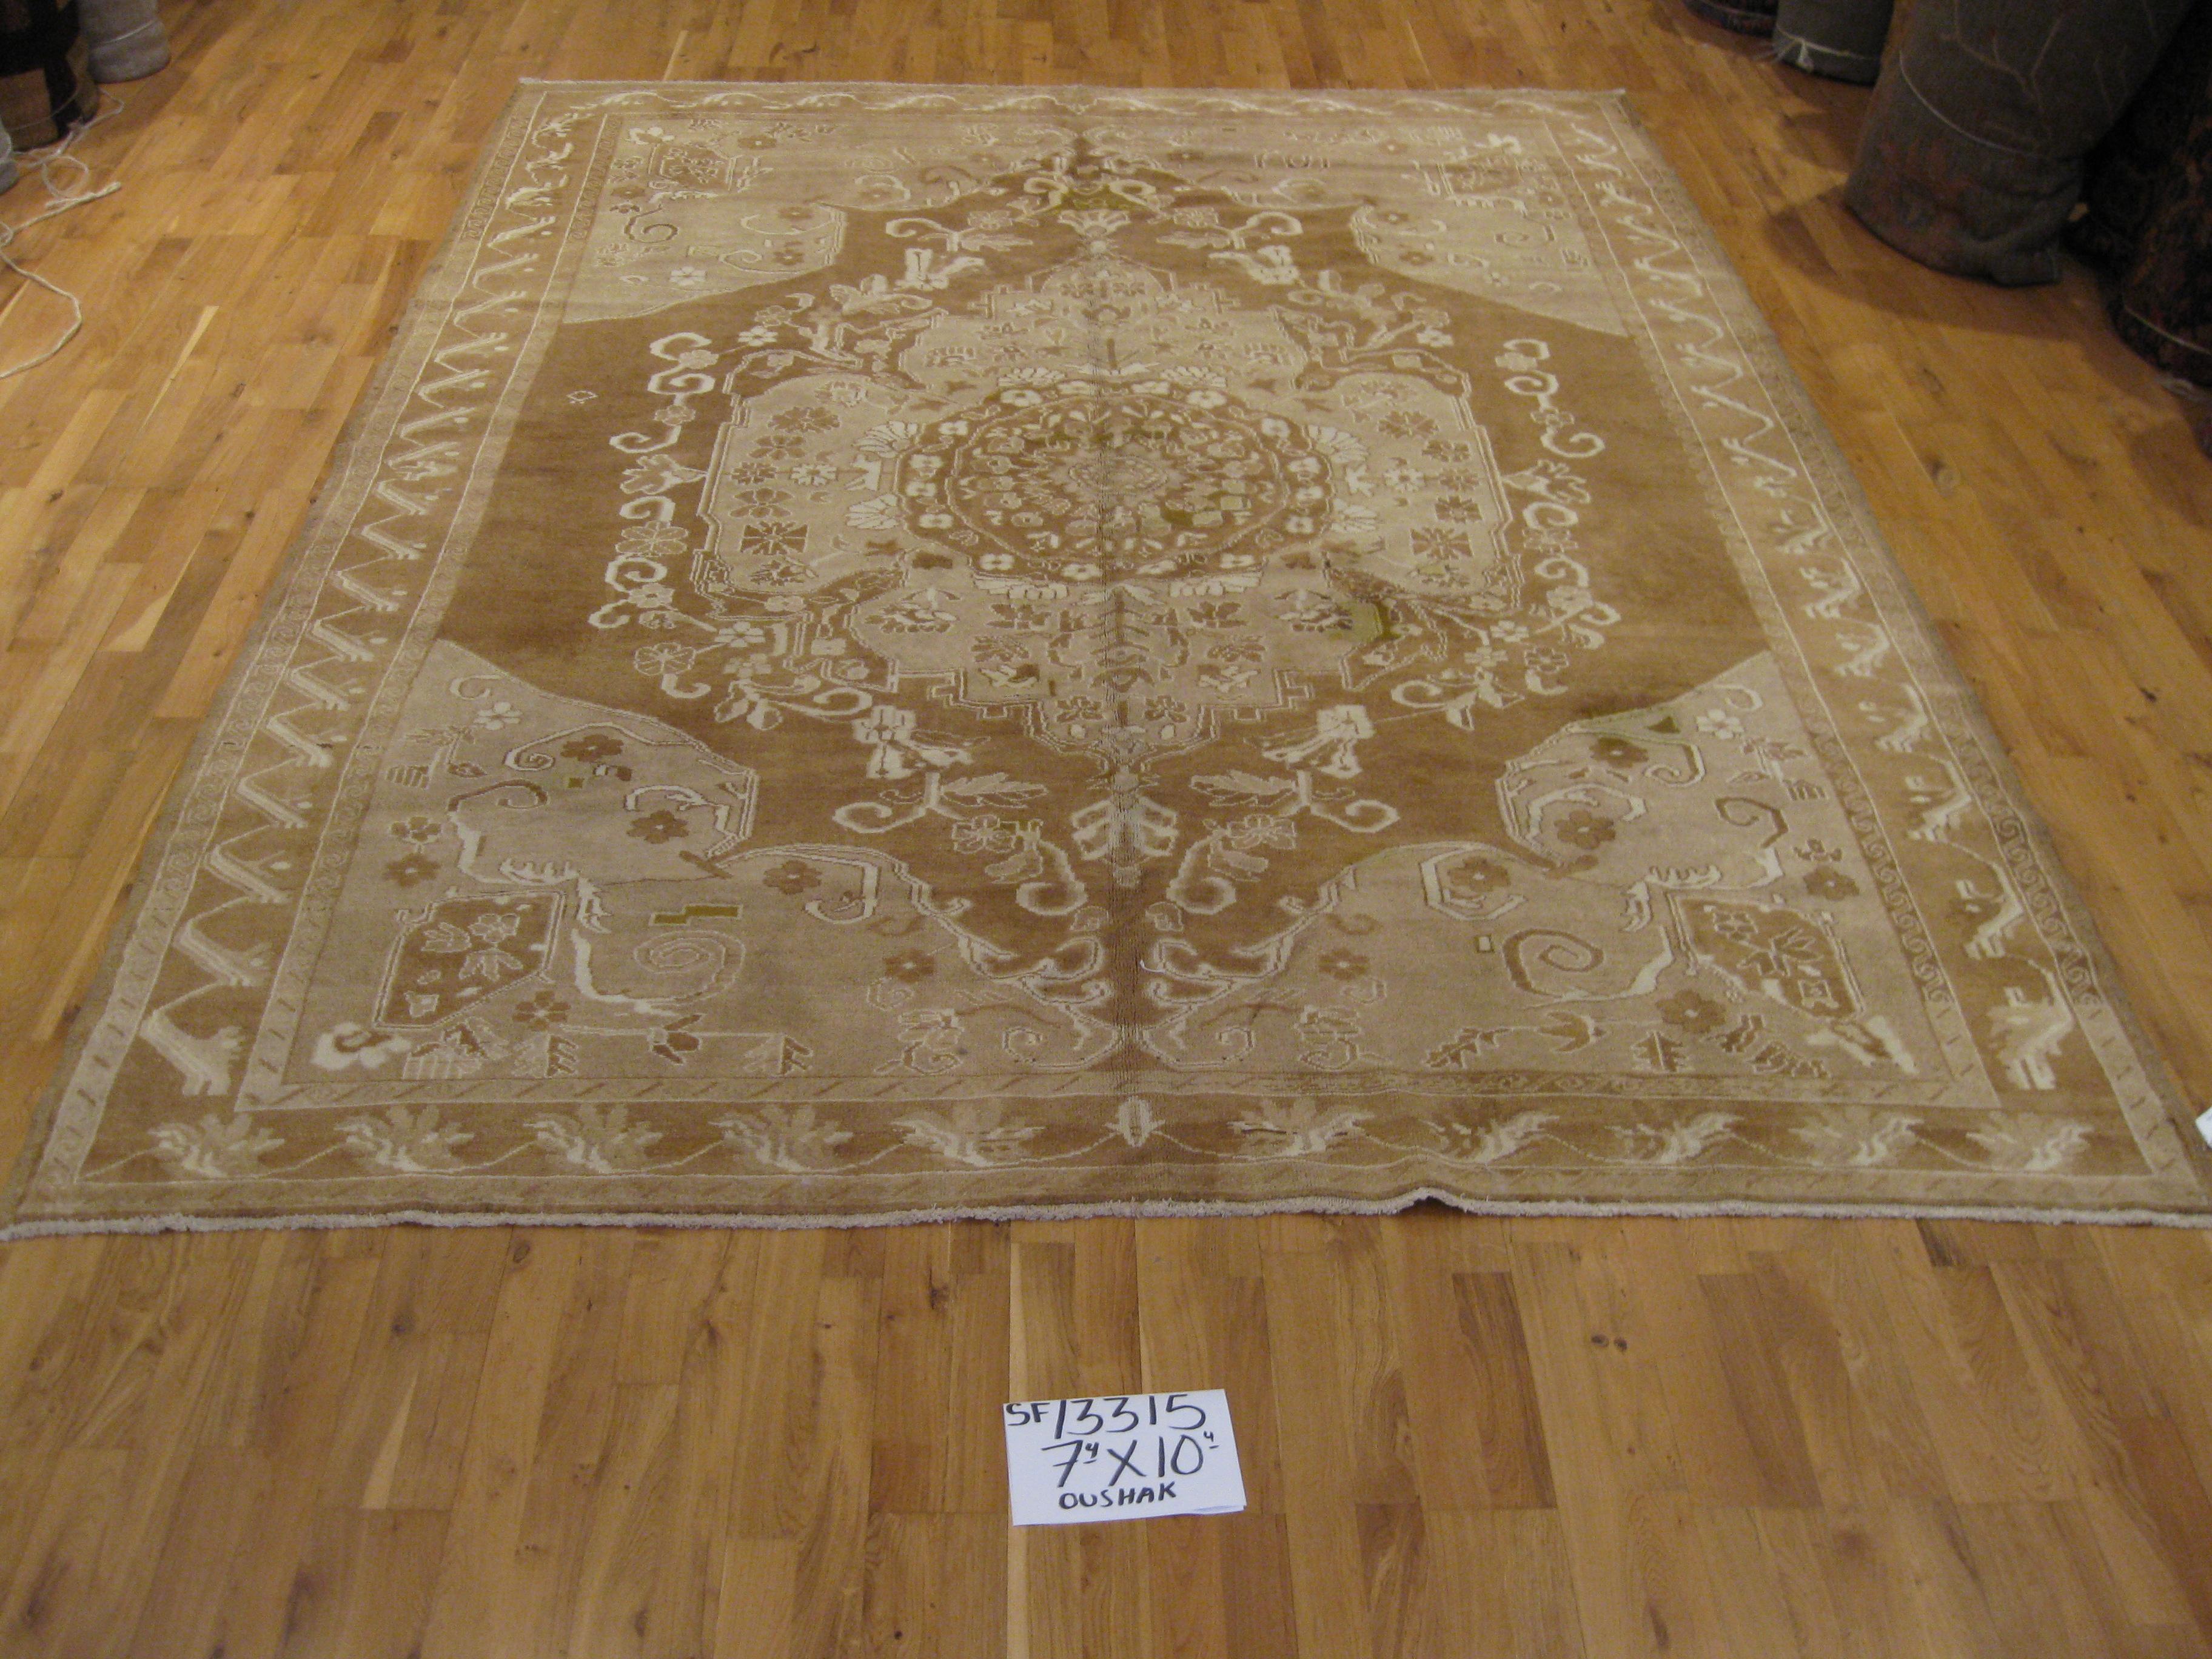 Antique Oushak rug

Measurement: 7'11